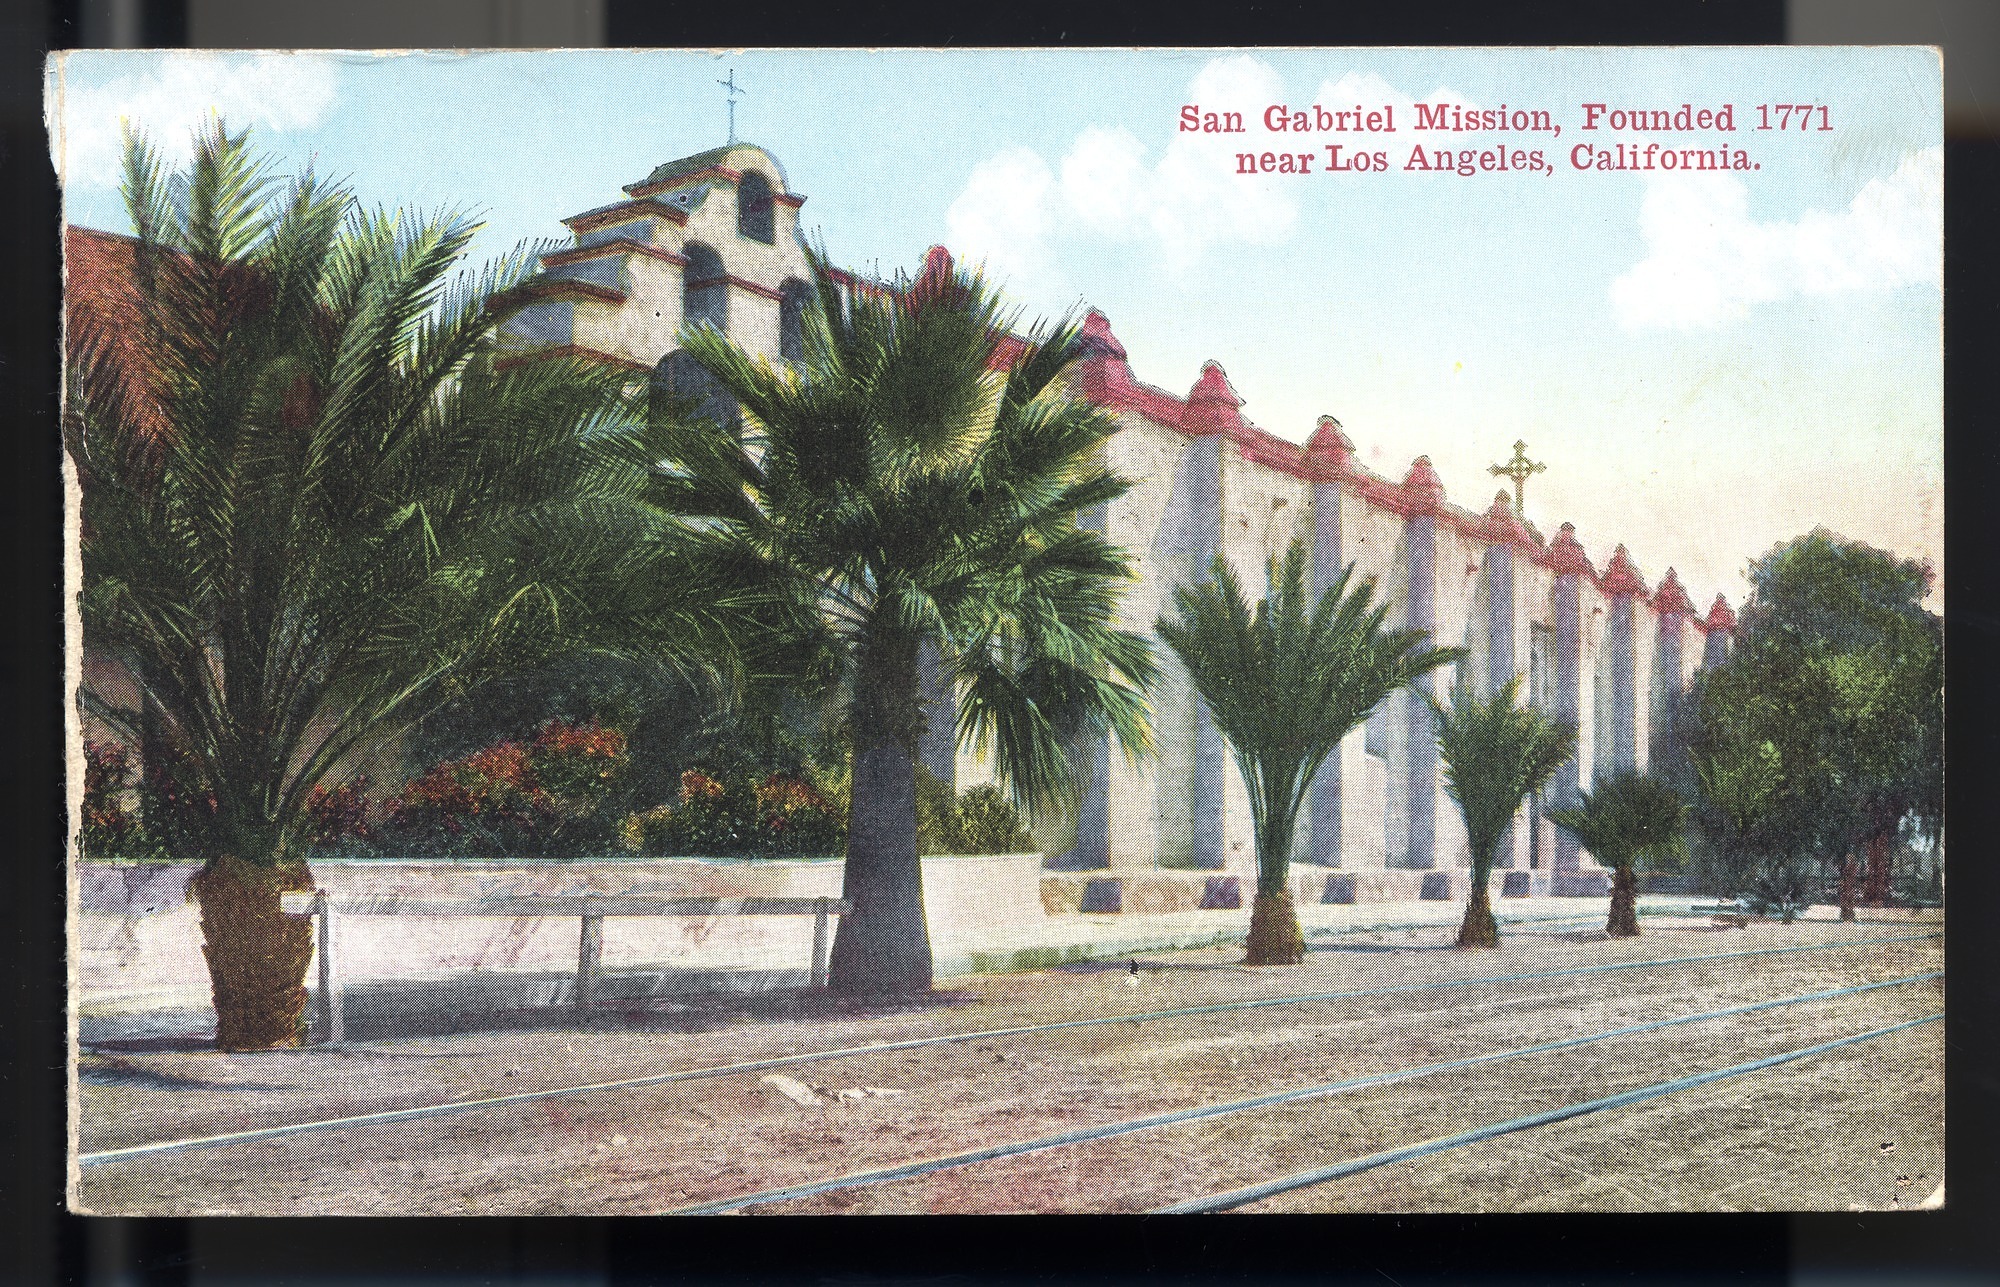 Postcard 14 – San Gabriel Mission, Founded 1771 near Los Angeles, California. Van Ornum Colorprint Company. 1908-1921. NMAH 1986.0639.0473.